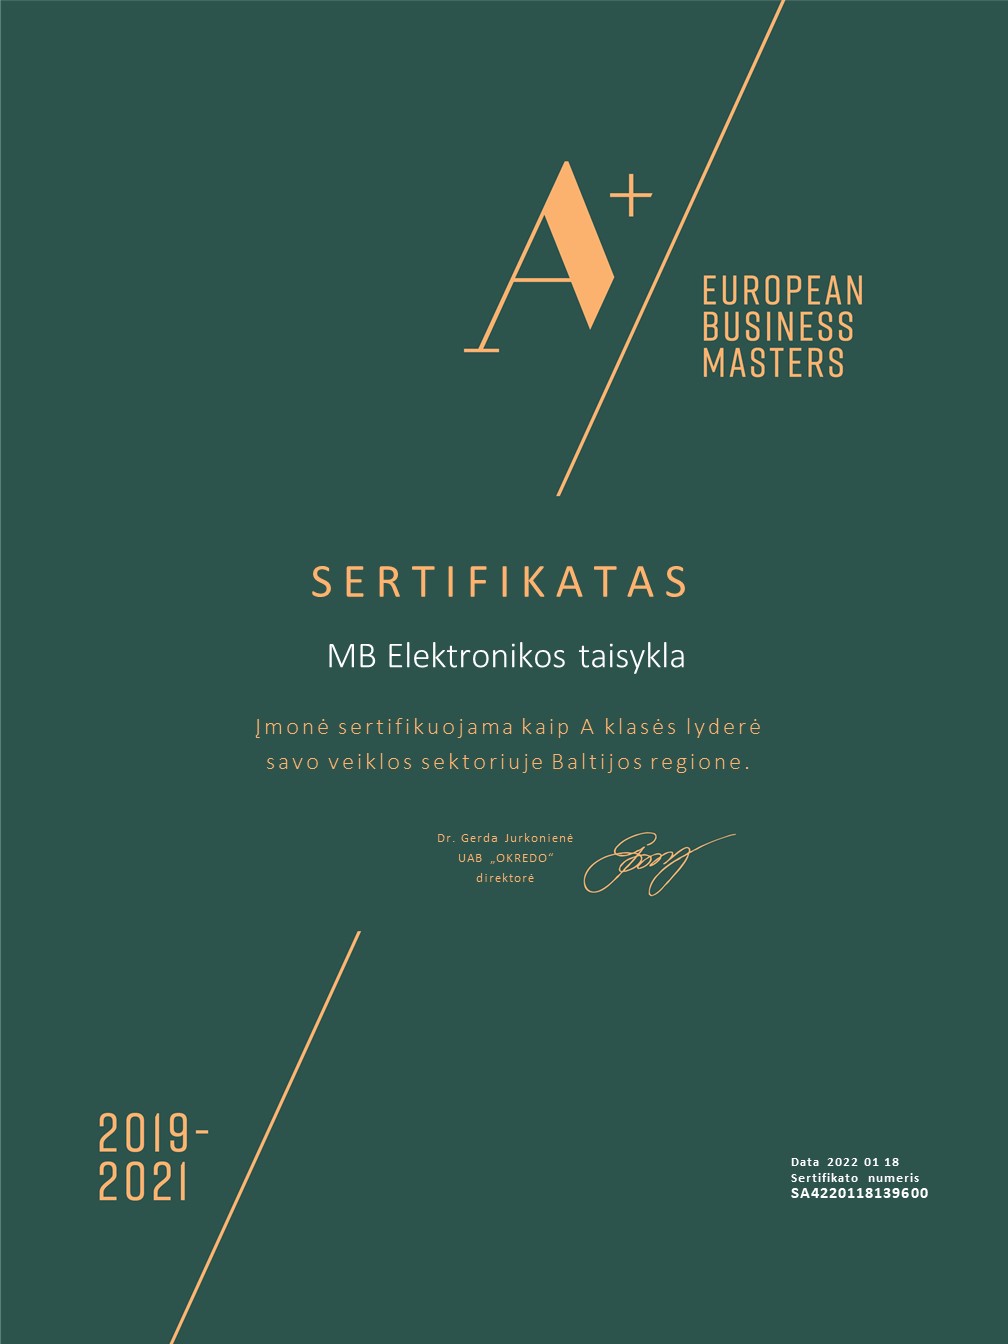 Abalt sertifikas 2019-2021